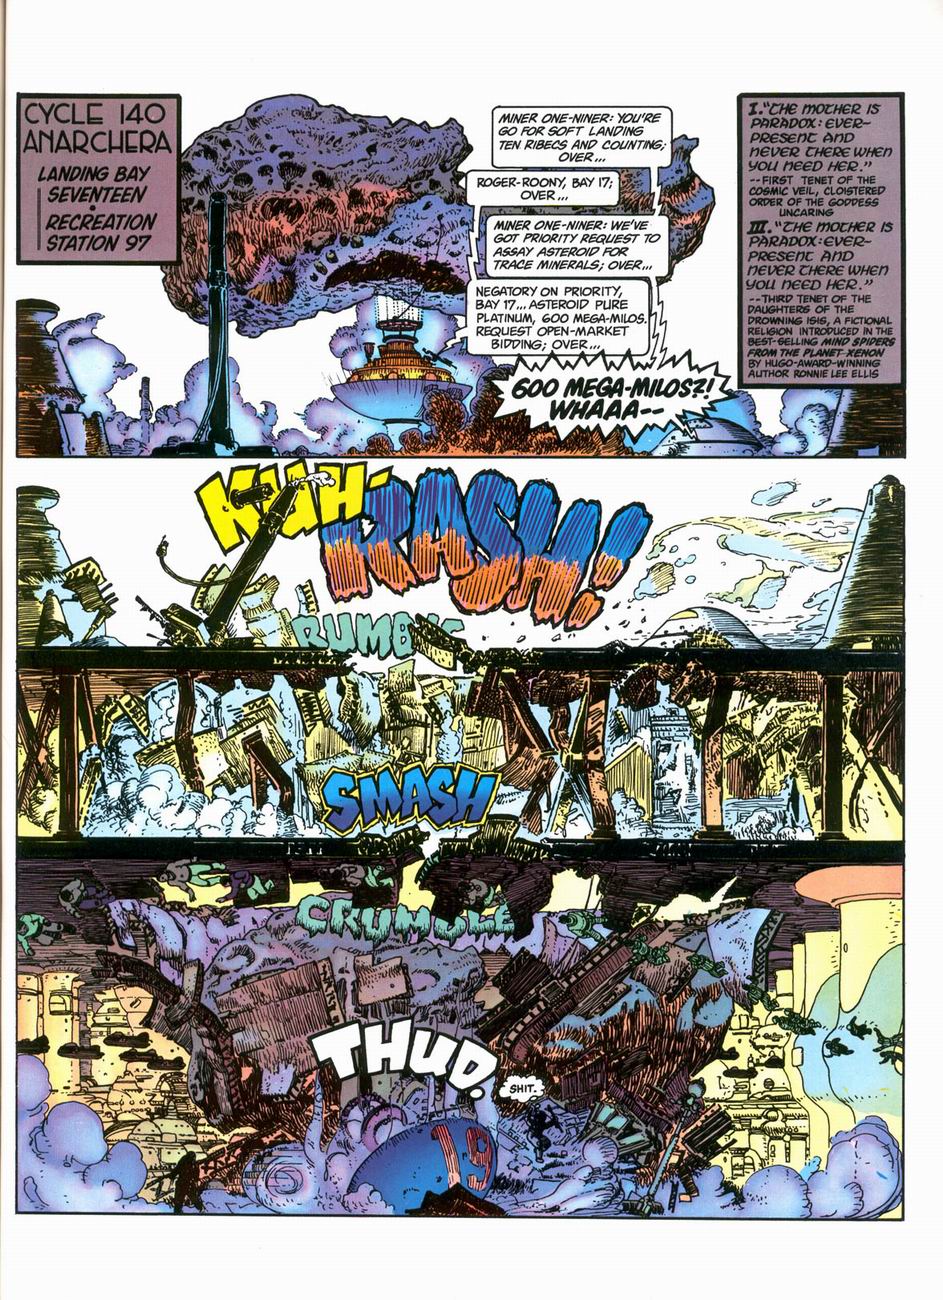 Marvel Graphic Novel issue 13 - Starstruck - Page 58